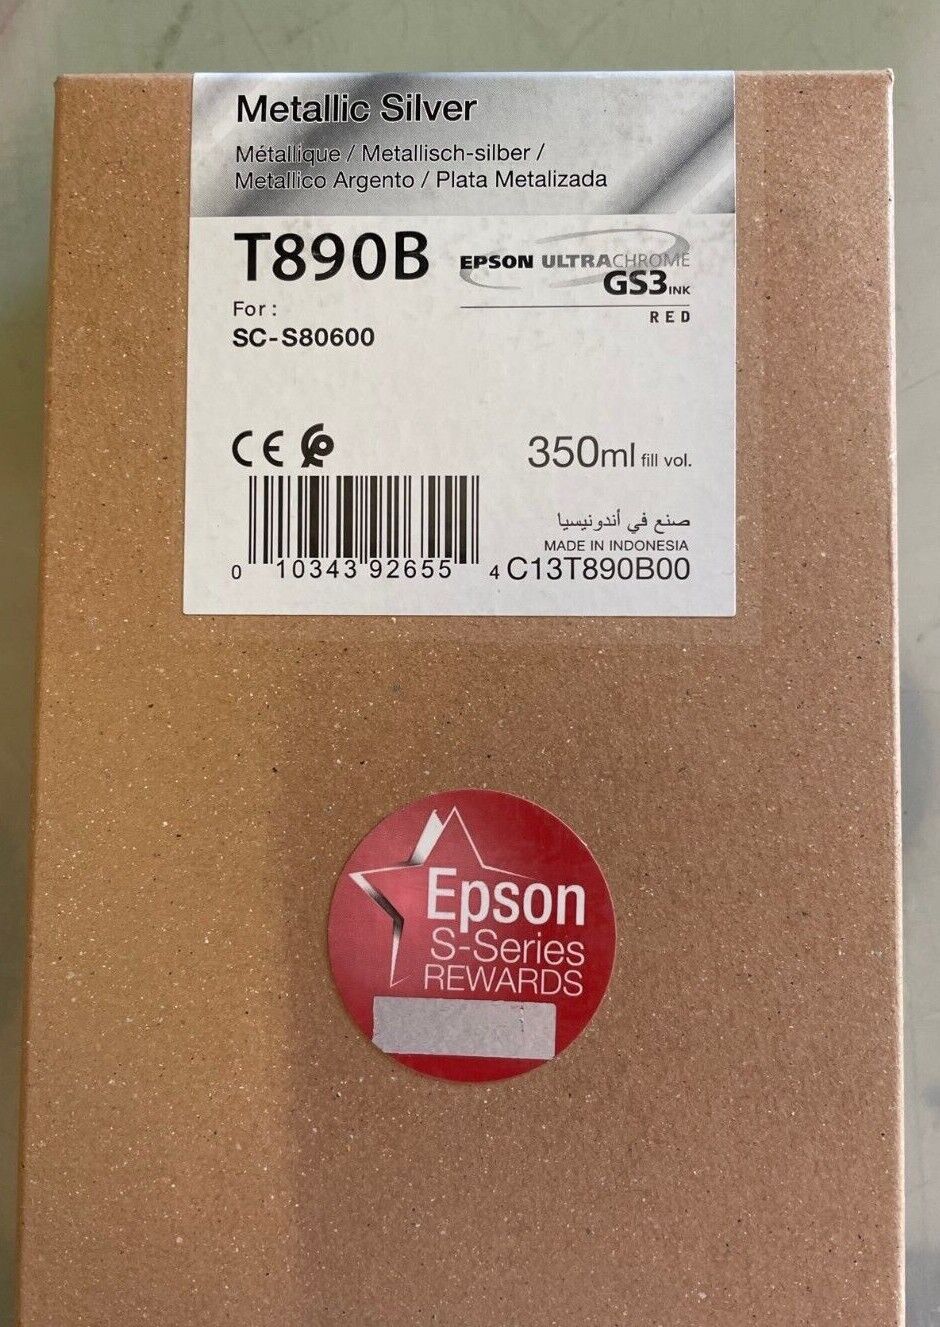 New Epson T890B Metallic Silver 600ml Ink Cartridge SC-S80600 Expired unopened